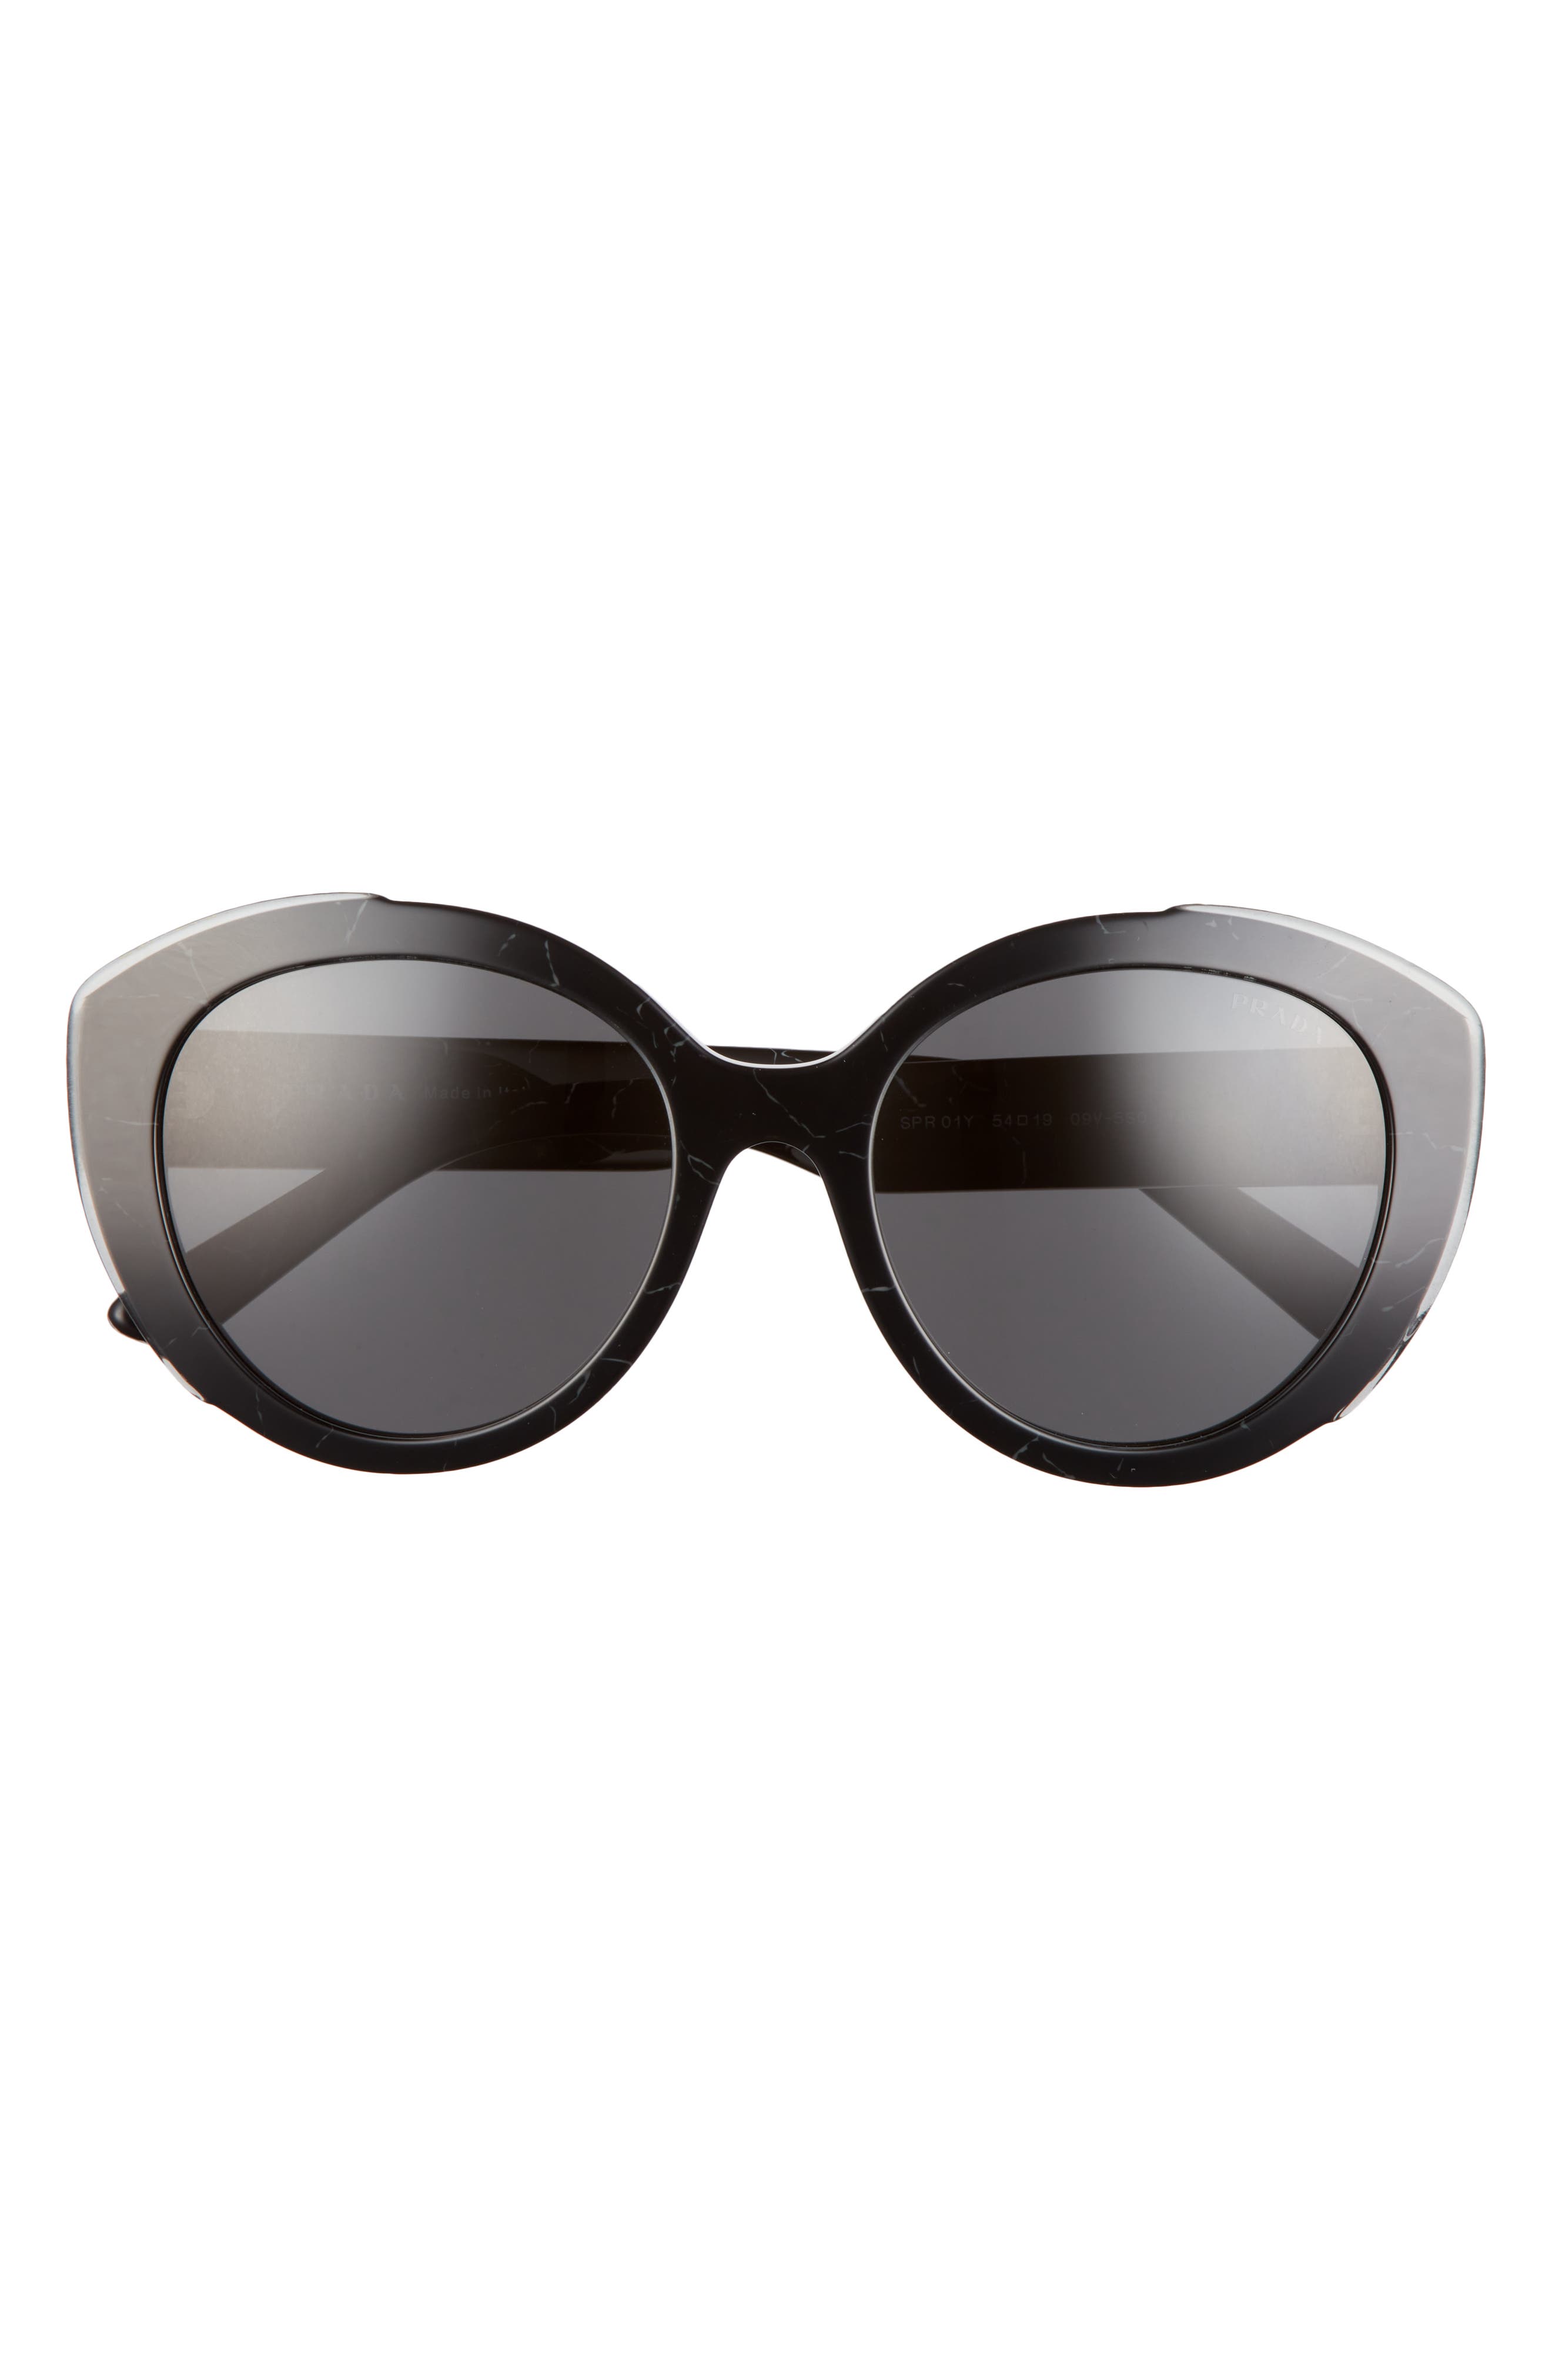 Prada 54mm Oval Cat Eye Sunglasses in Black Marble Grey at Nordstrom